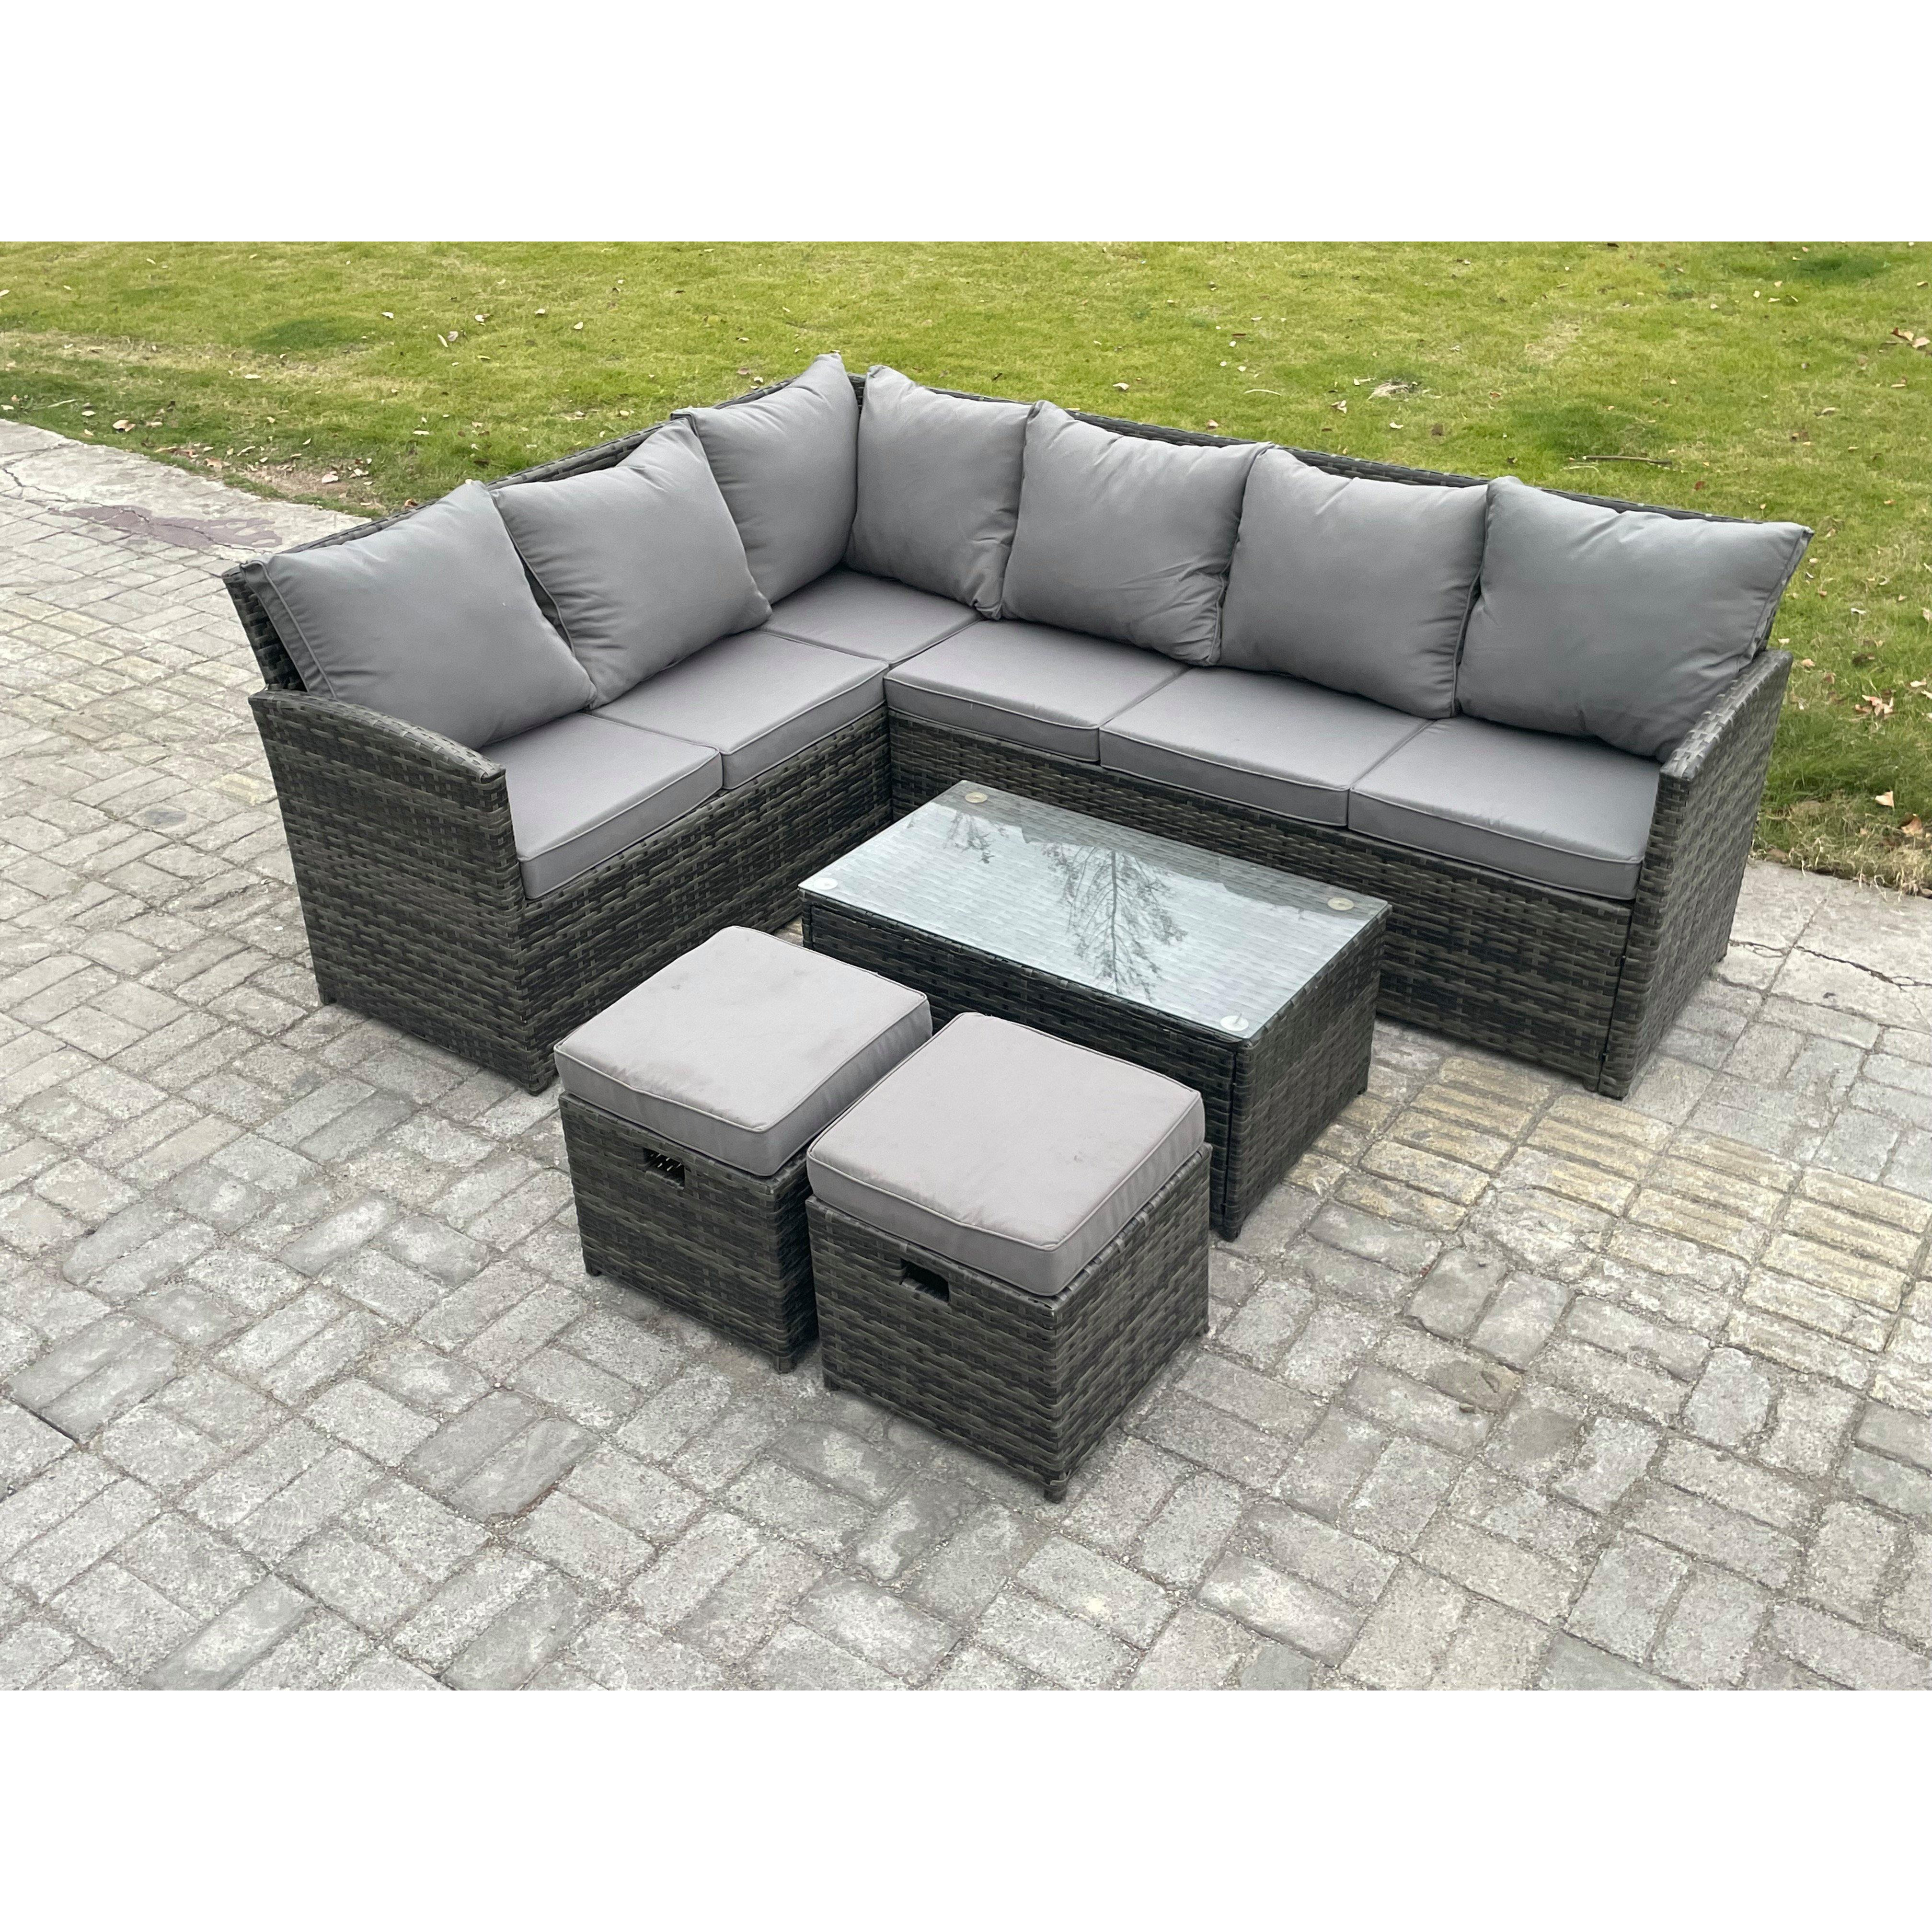 Rattan Lounge Corner Sofa Set Wicker Outdoor Garden Furniture Set with Rectangular Coffee Table 2 Small Footstools - image 1